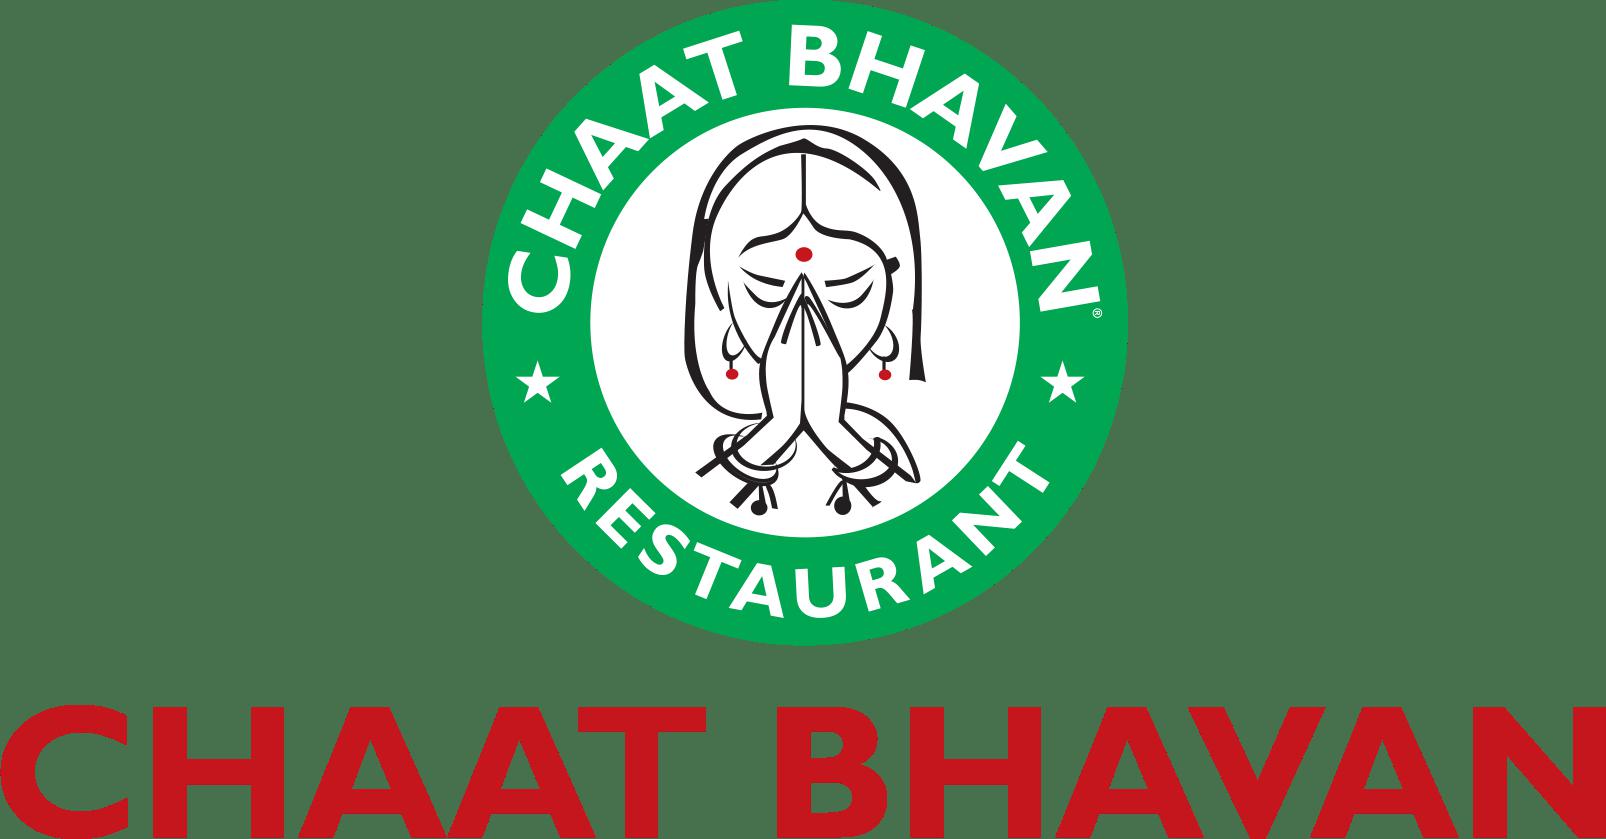 Chaat Bhavan Sunnyvale